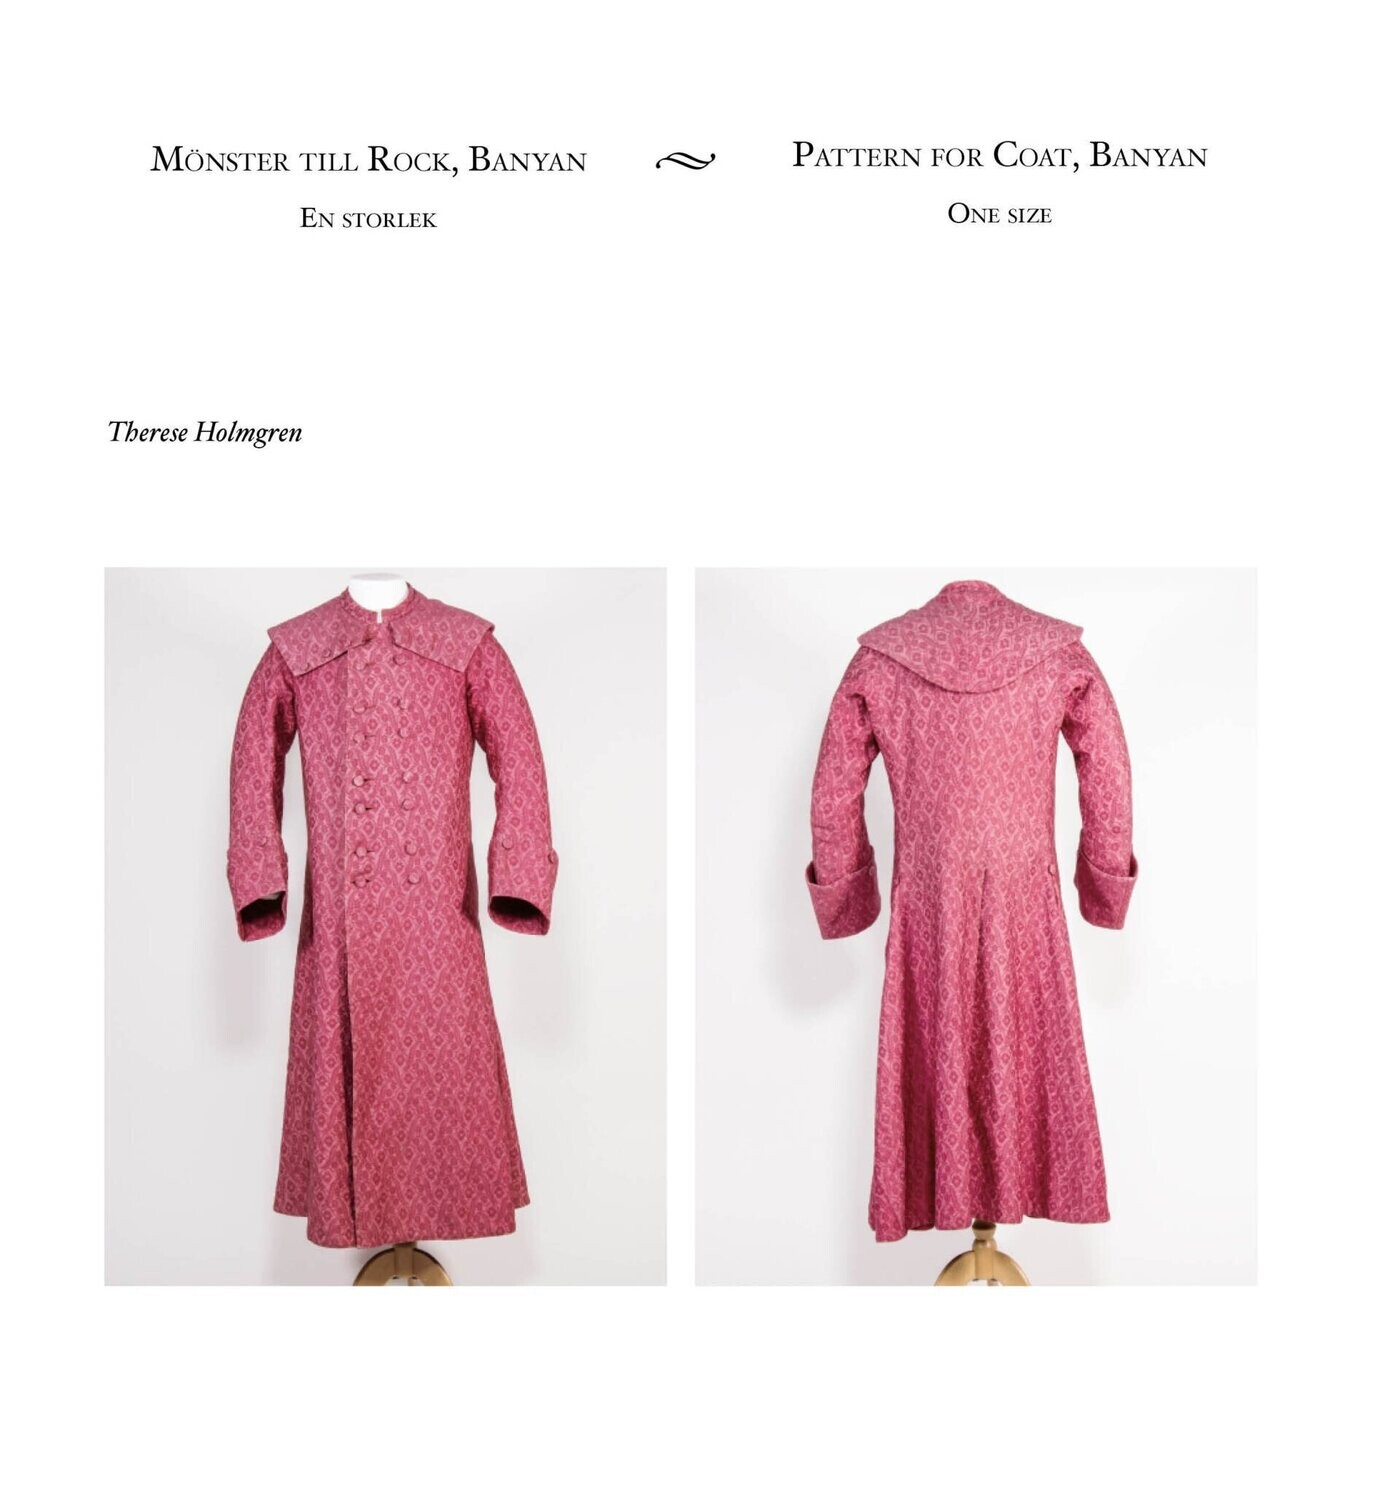 Pattern for Coat, Banyan PDF